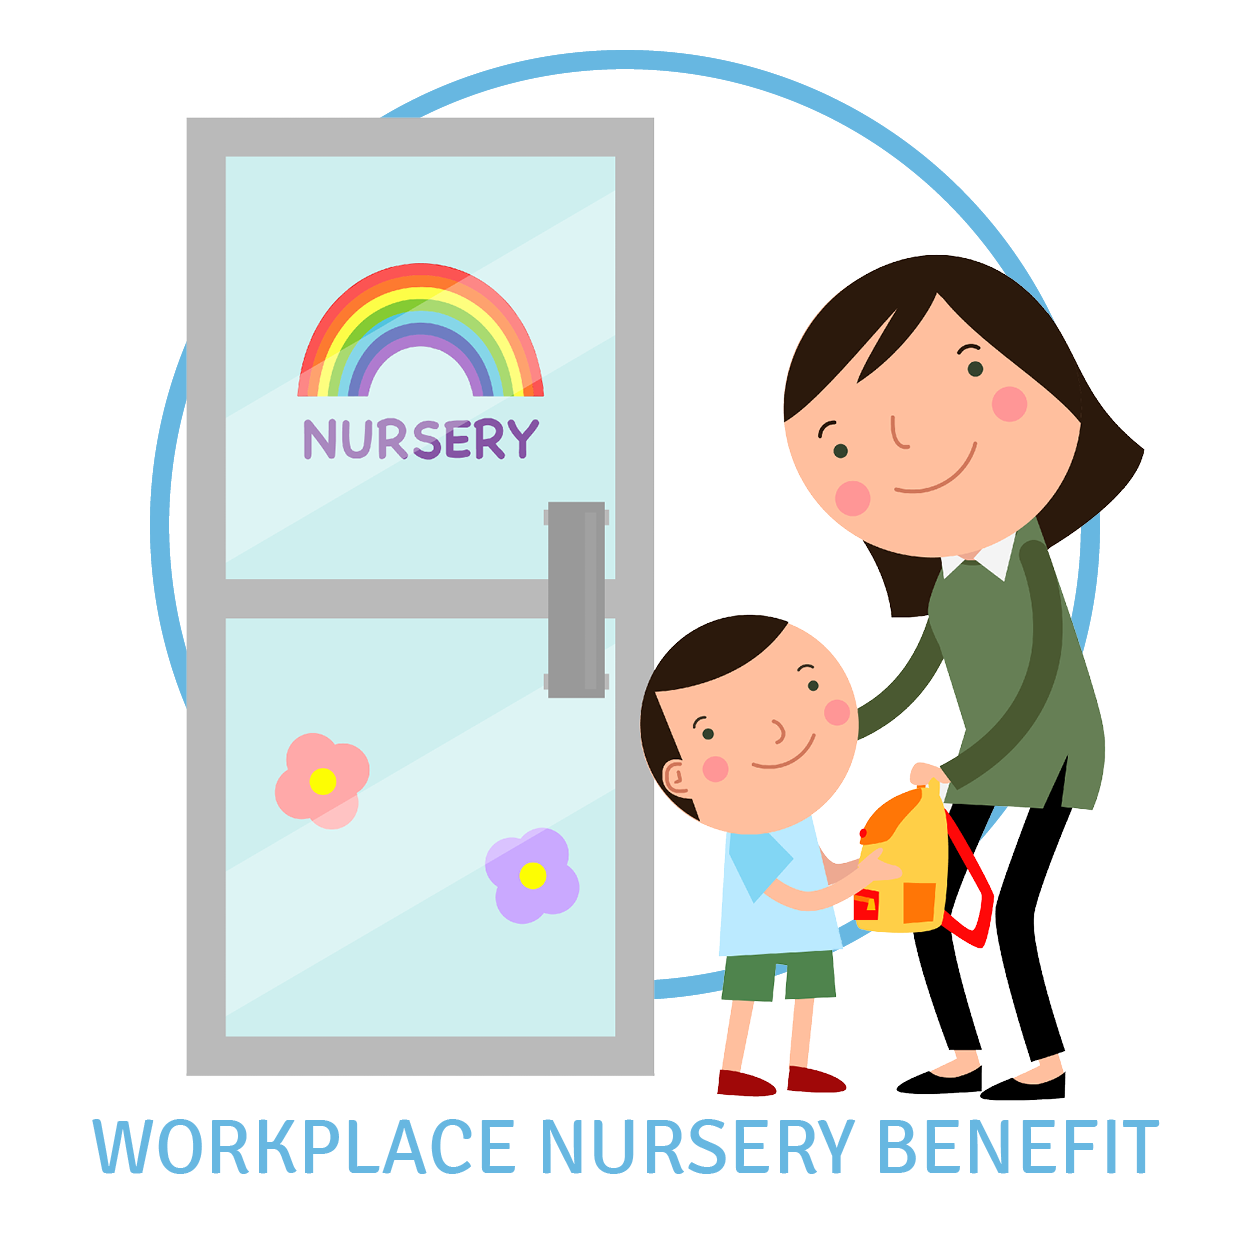 Workplace Nursery Benefit